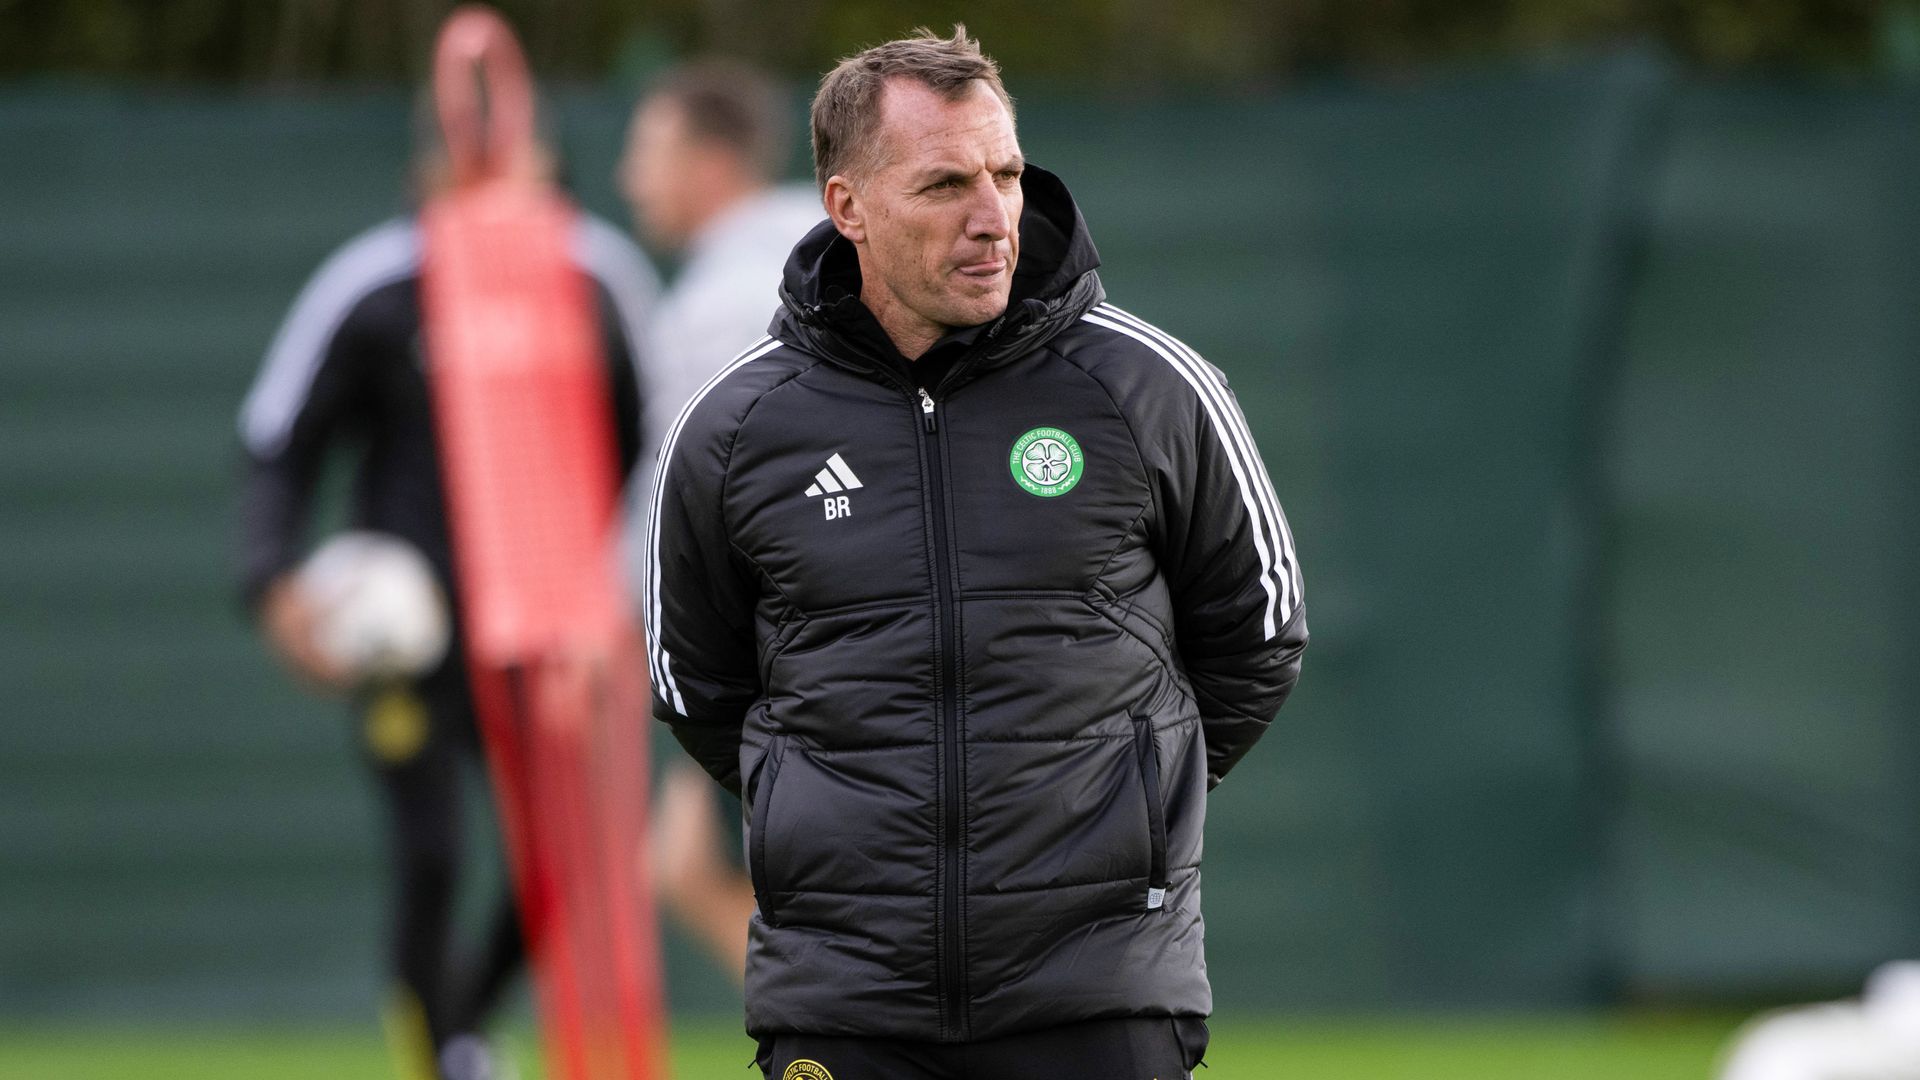 Celtic have taken 'mental step forward', says Rodgers